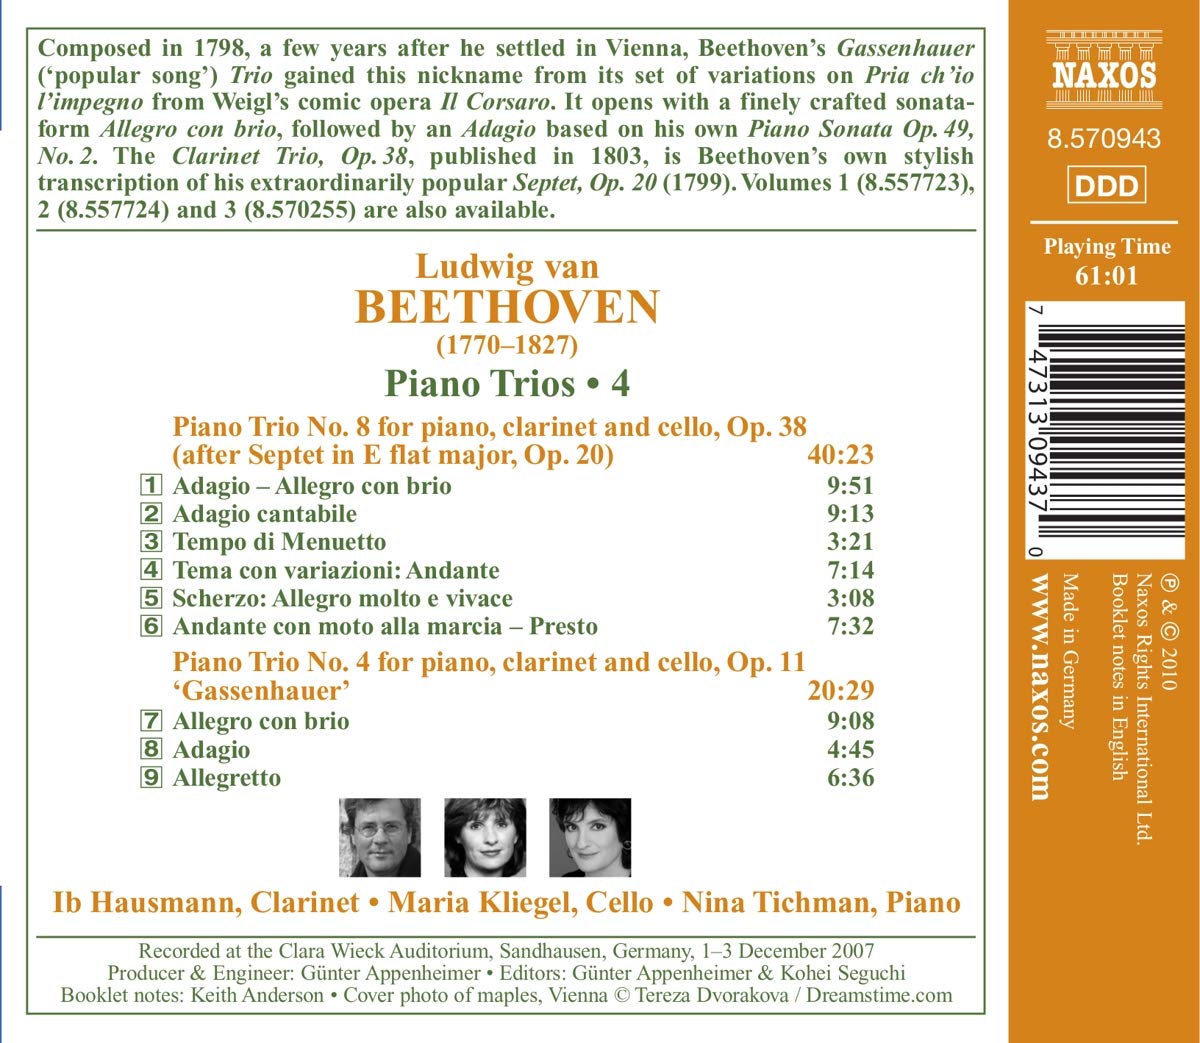 Ib Hausmann / Maria Kliegel / Nina Tichman 베토벤: 클라리넷, 피아노, 첼로를 위한 삼중주 4, 8번 (Beethoven: Piano Trios Nos. 4, 8) 